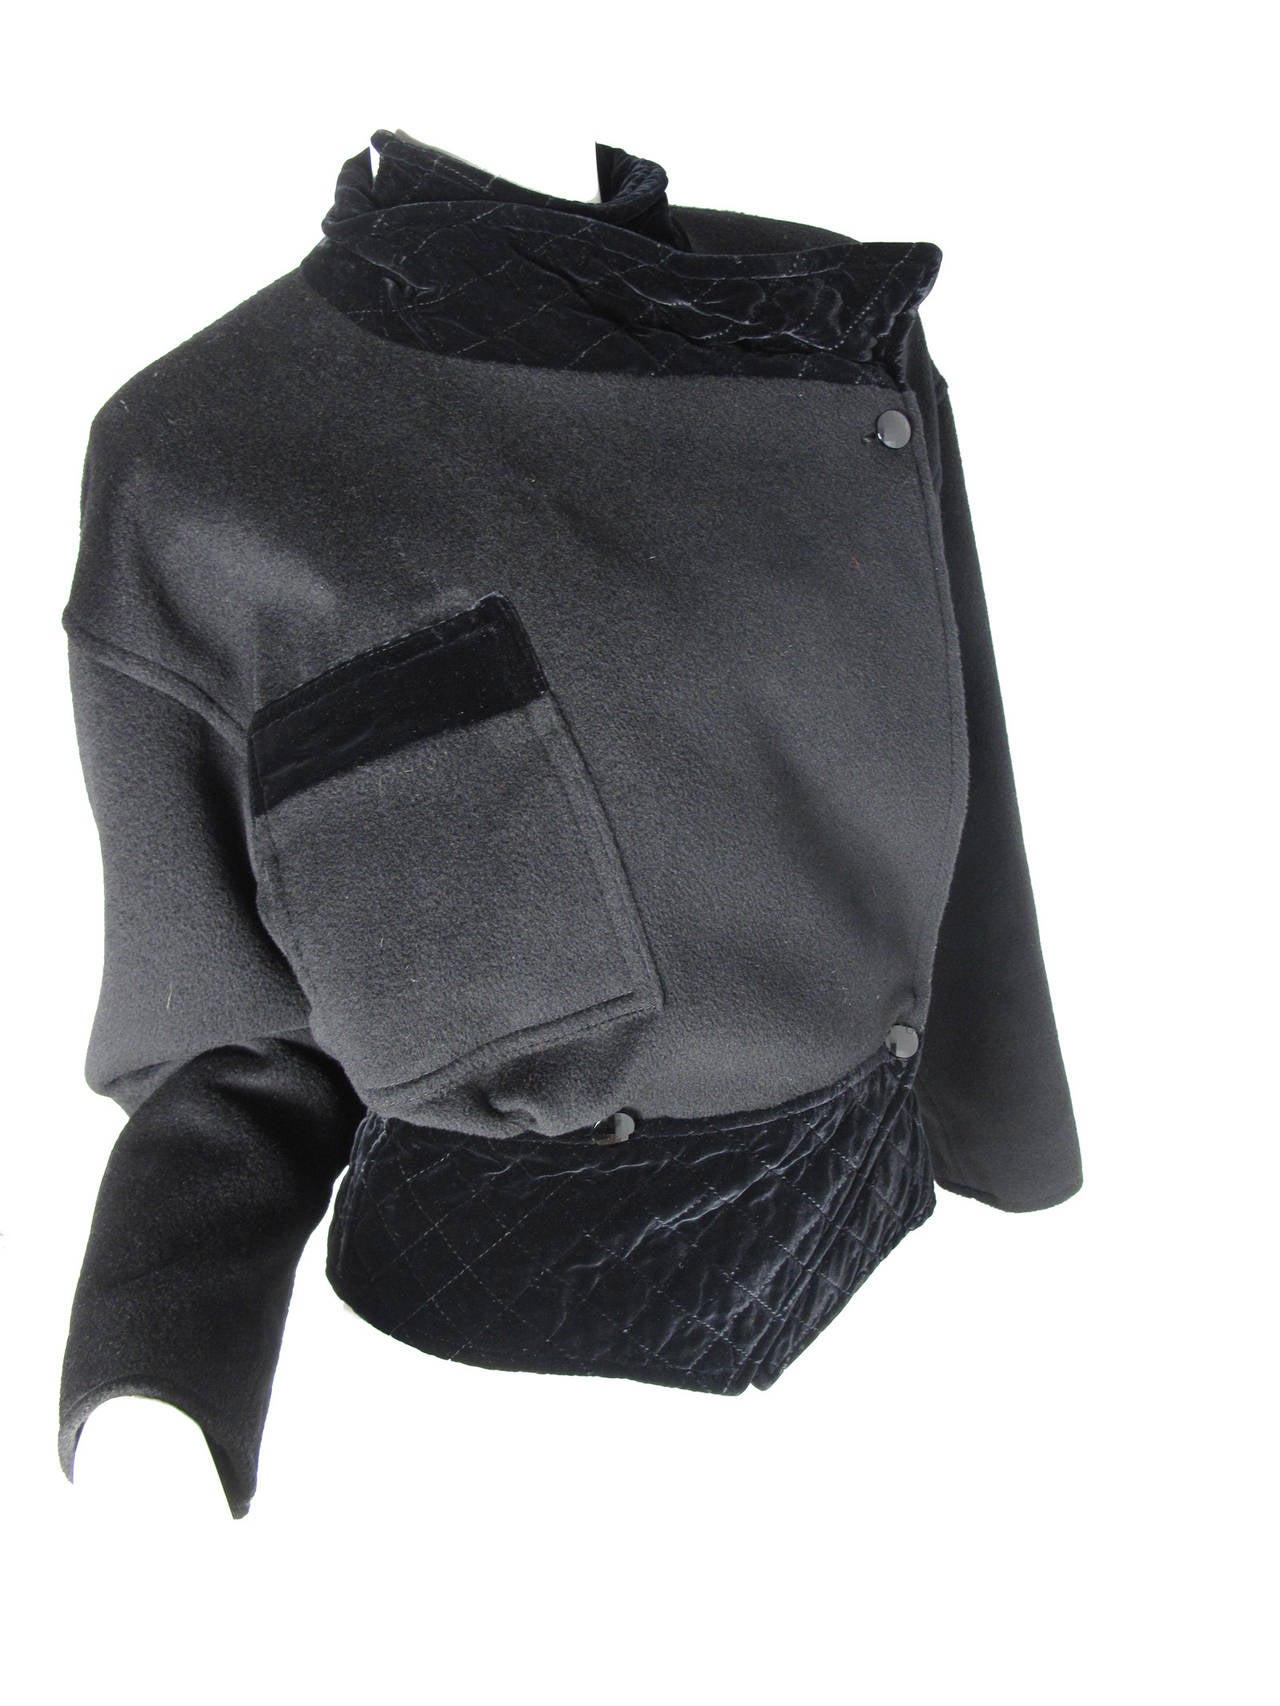 UNGARO black wool and velvet jacket. One front pocket. 45